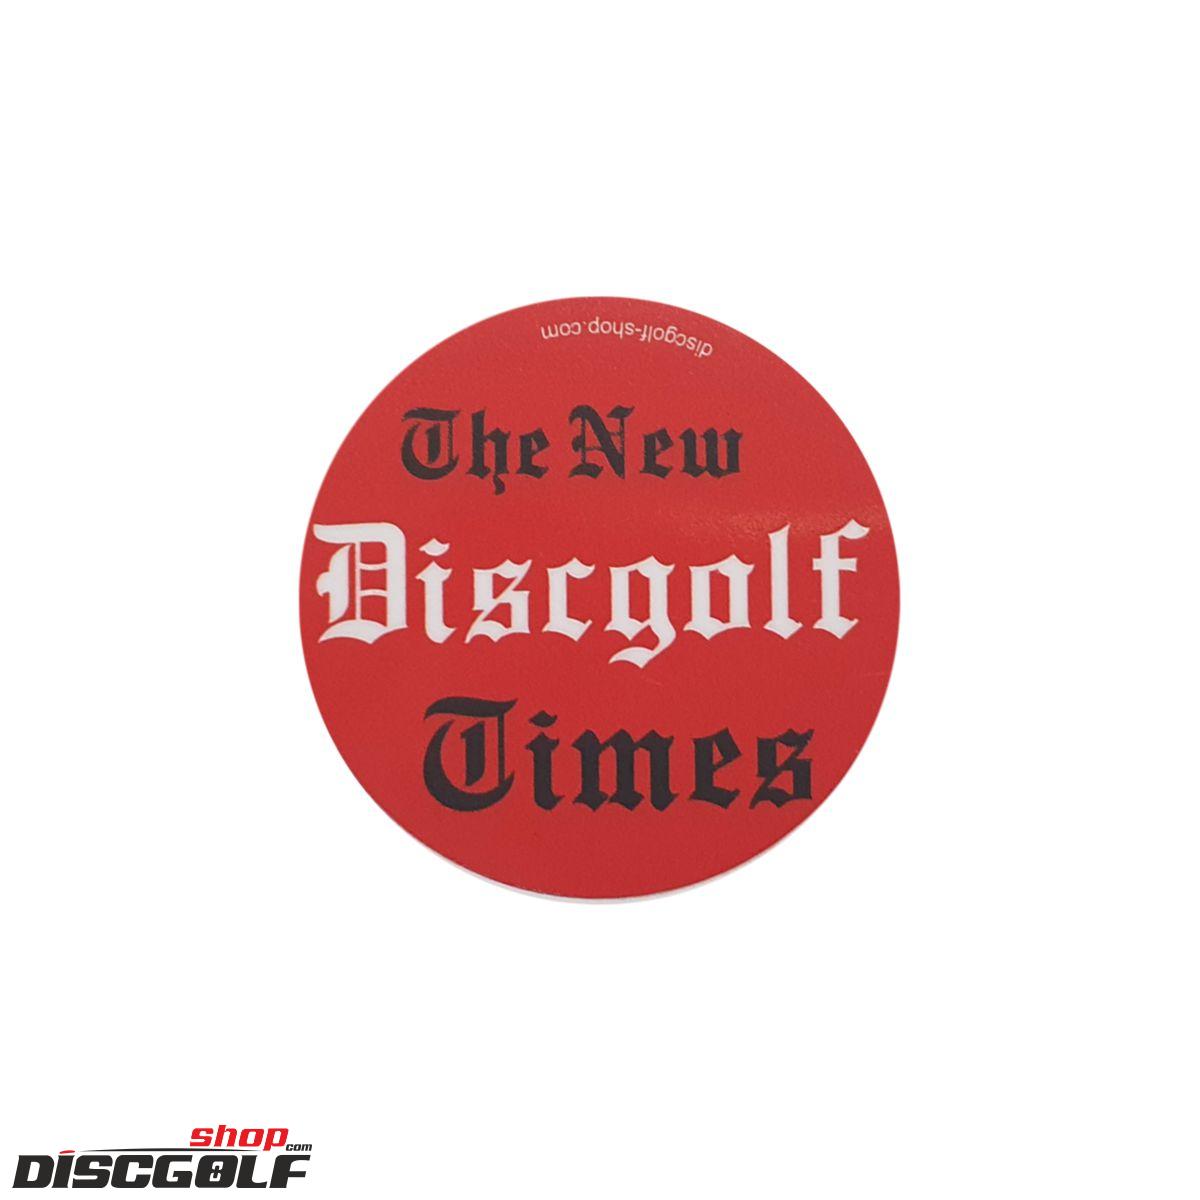 Samolepka "The New Discgolf Times" (discgolf)